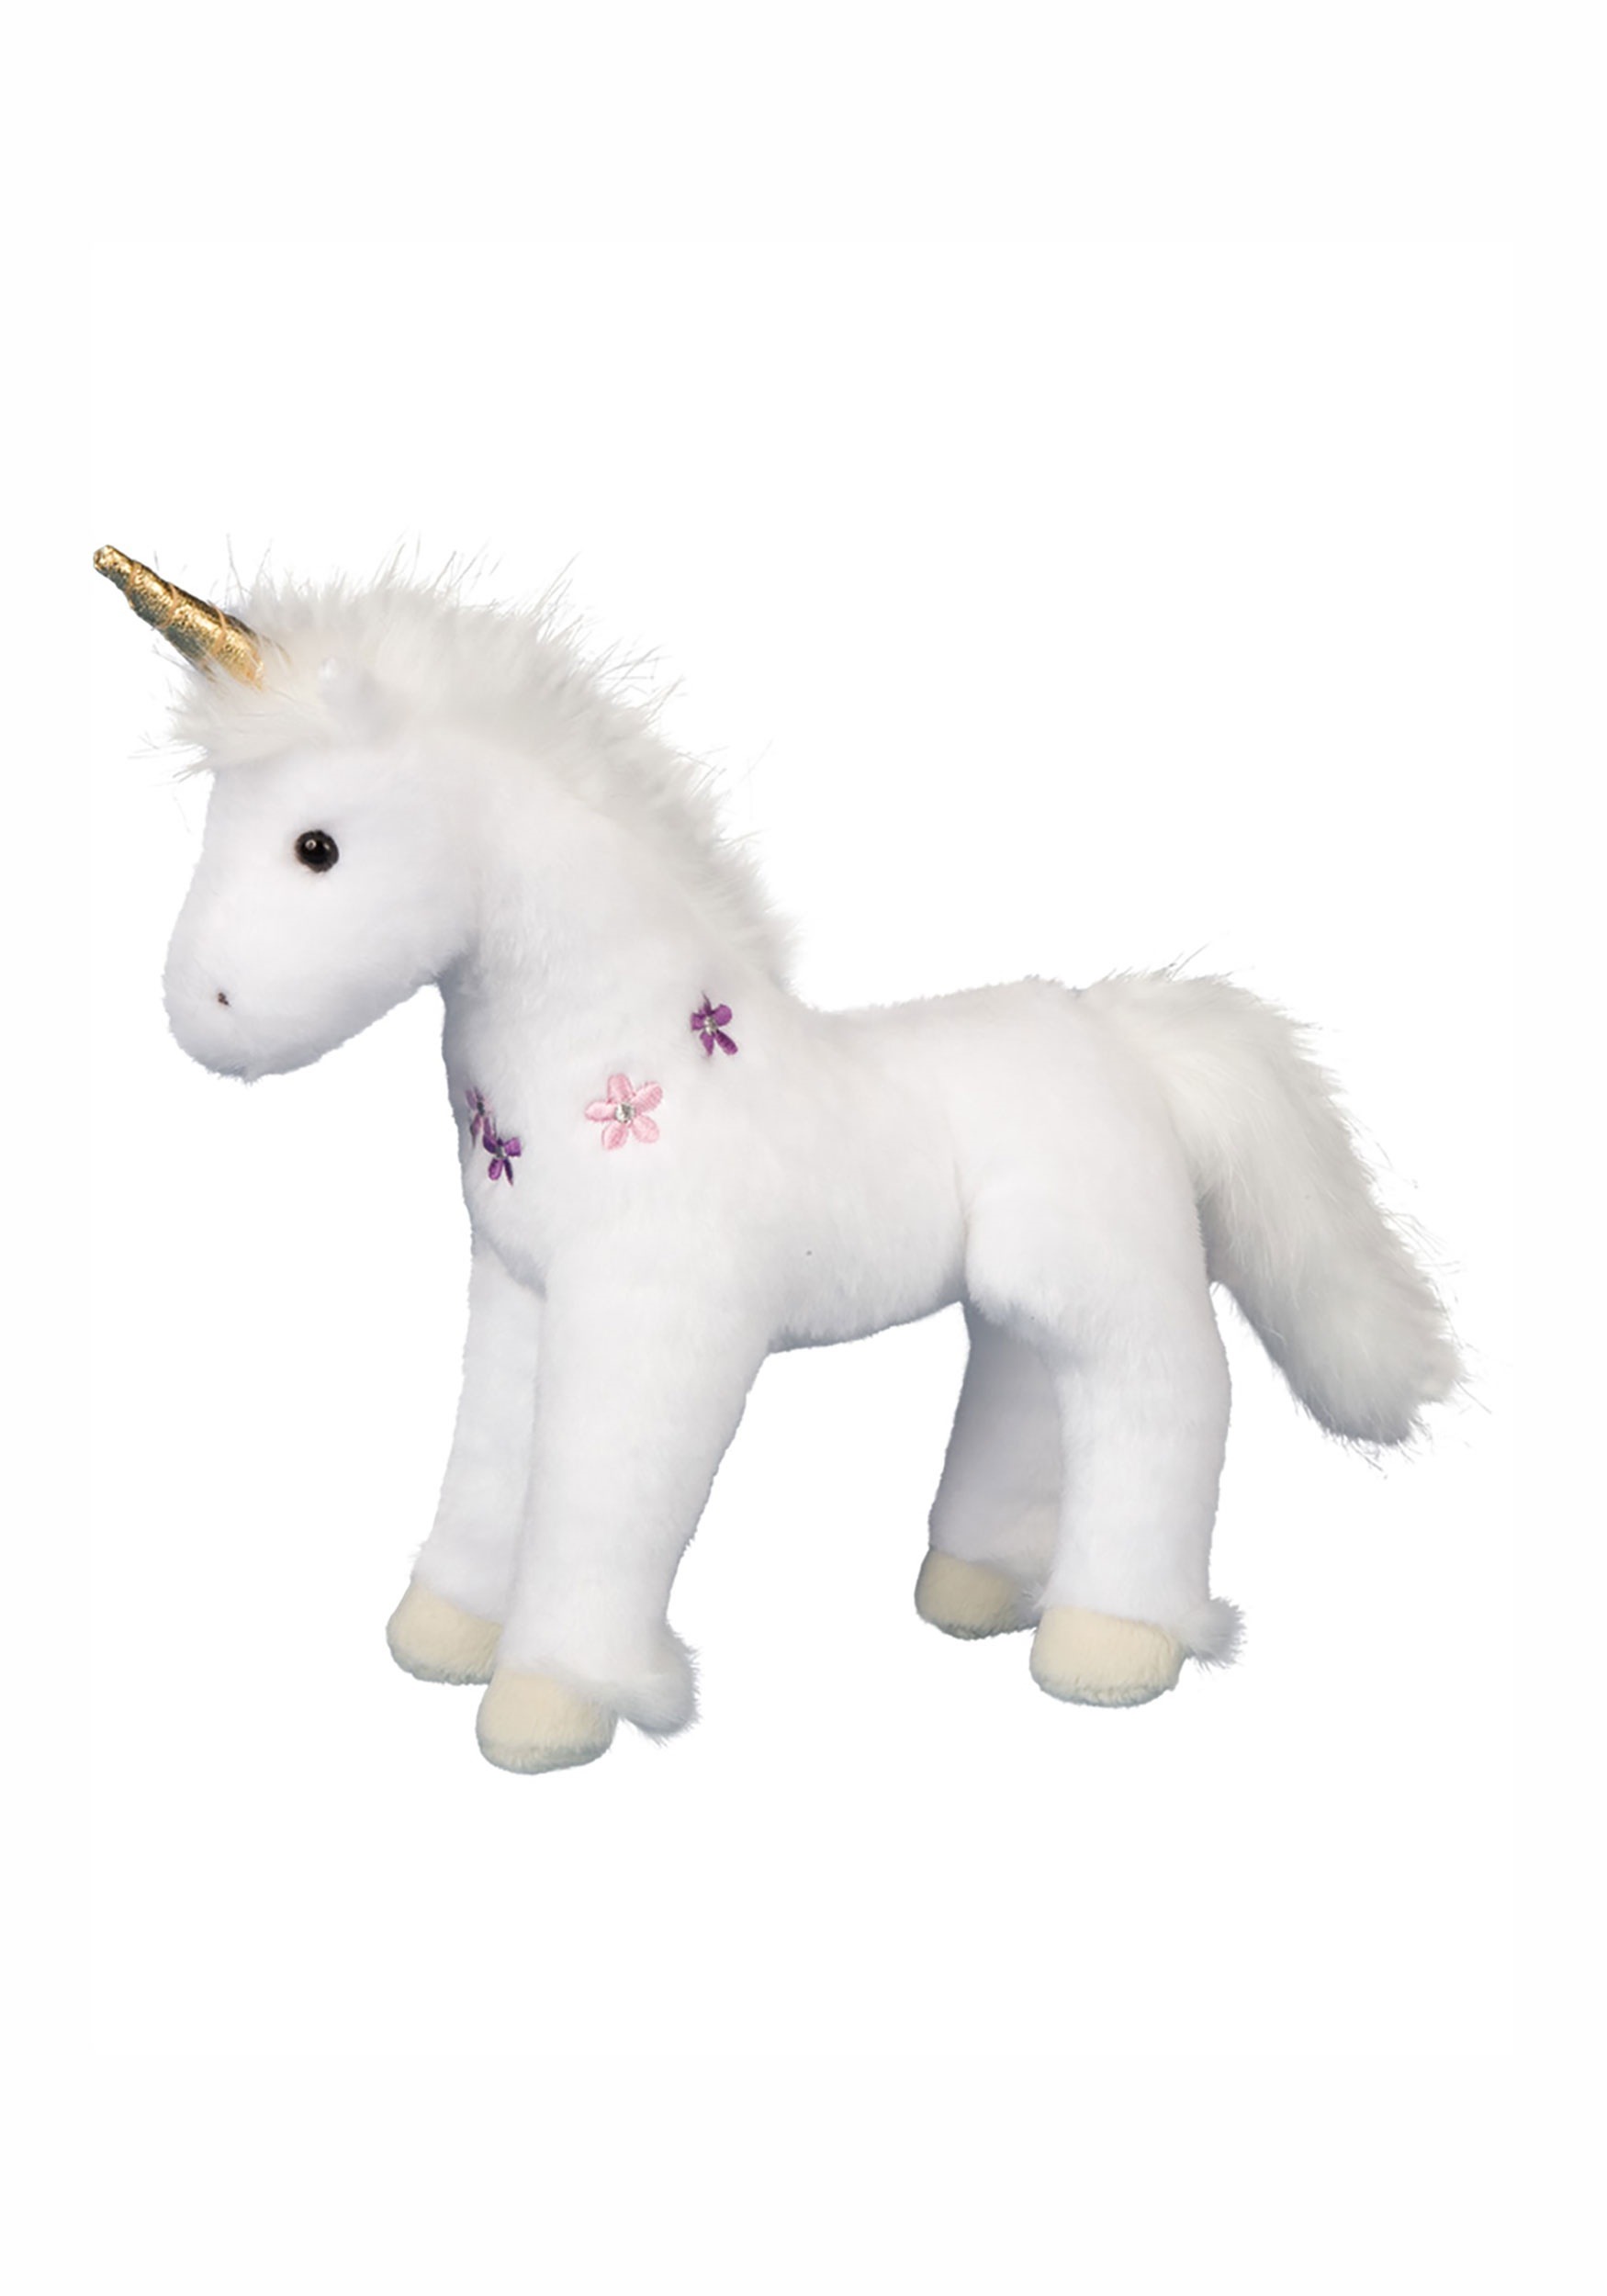 small unicorn figure